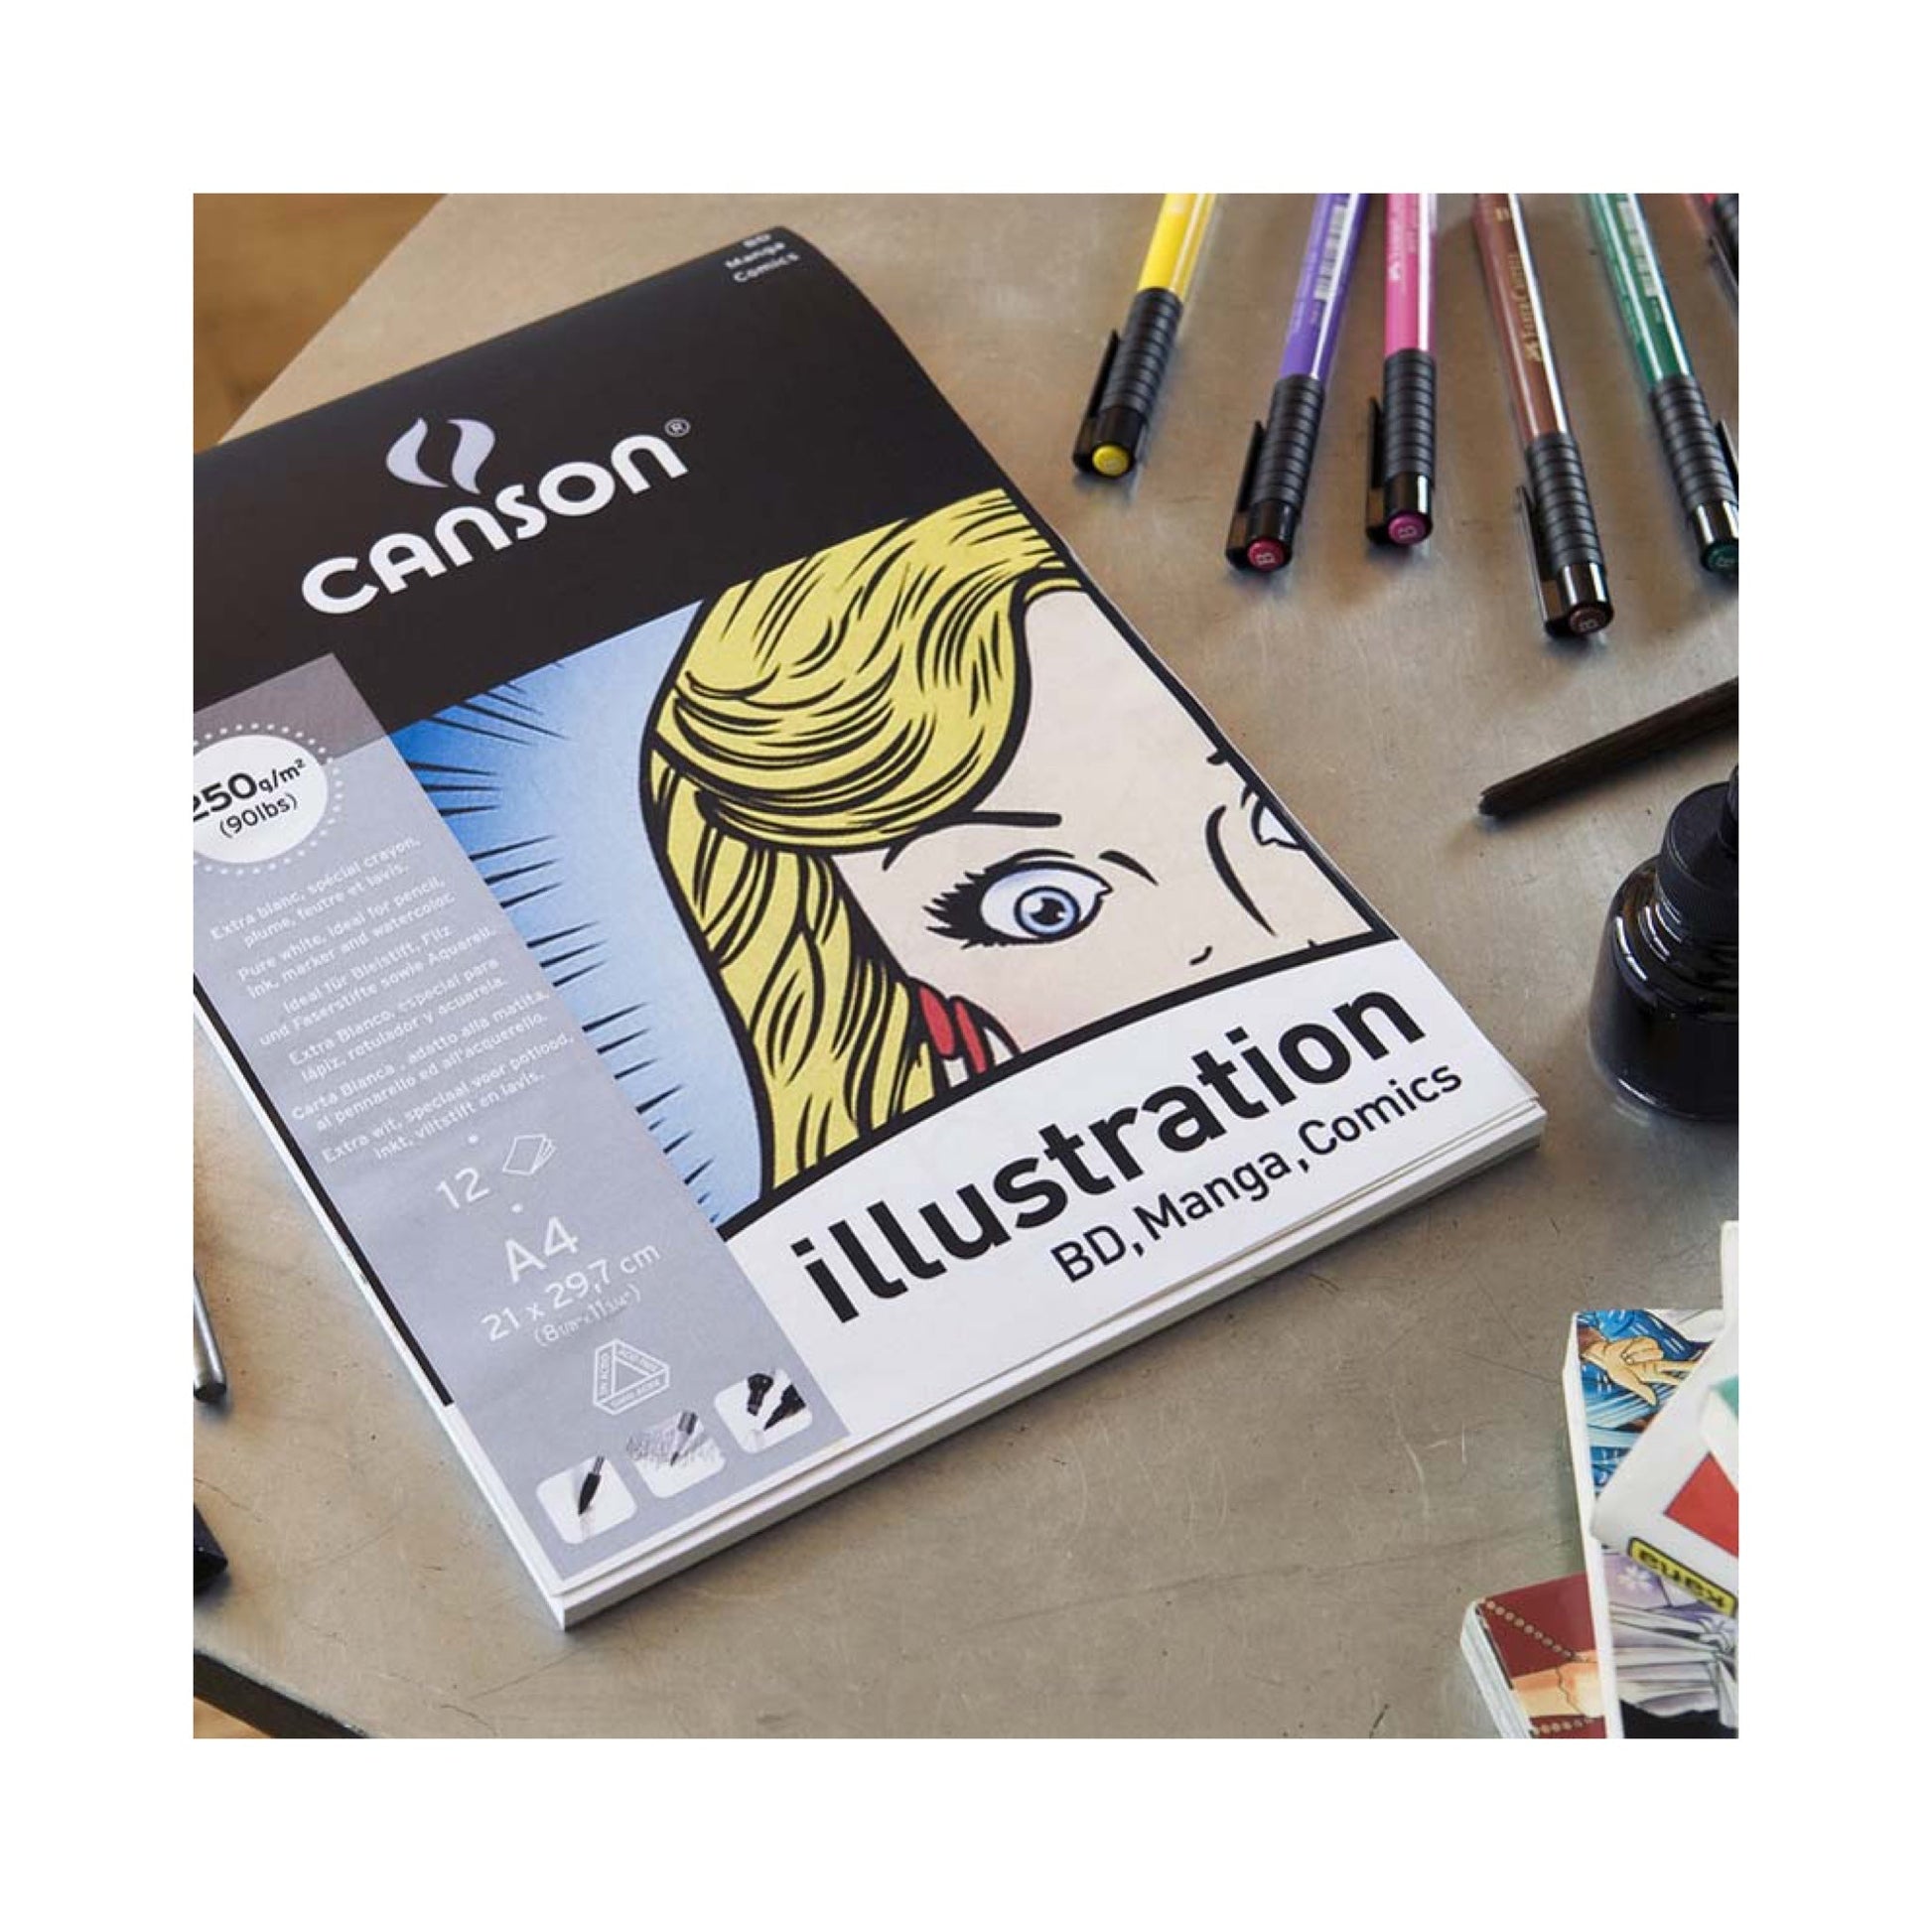 Canson ® Illustration 250 gm || دفتر رسم كانسون ابيض للمانقا 250 جرام